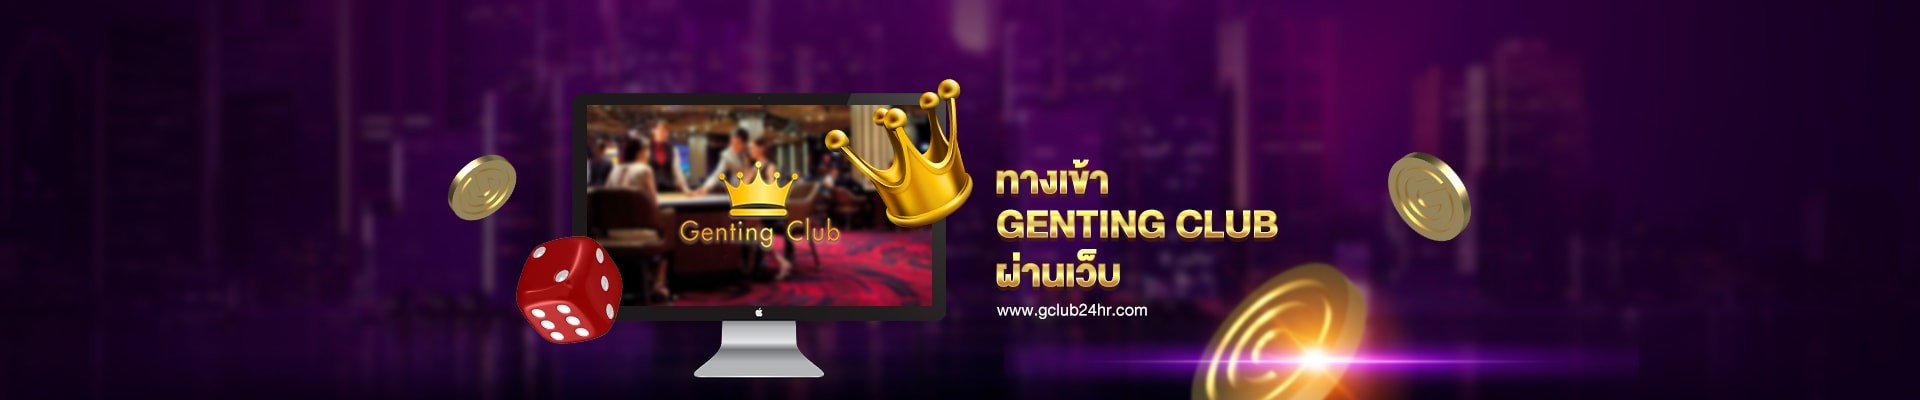 gclub24hr_casino_online_genting club_on_website